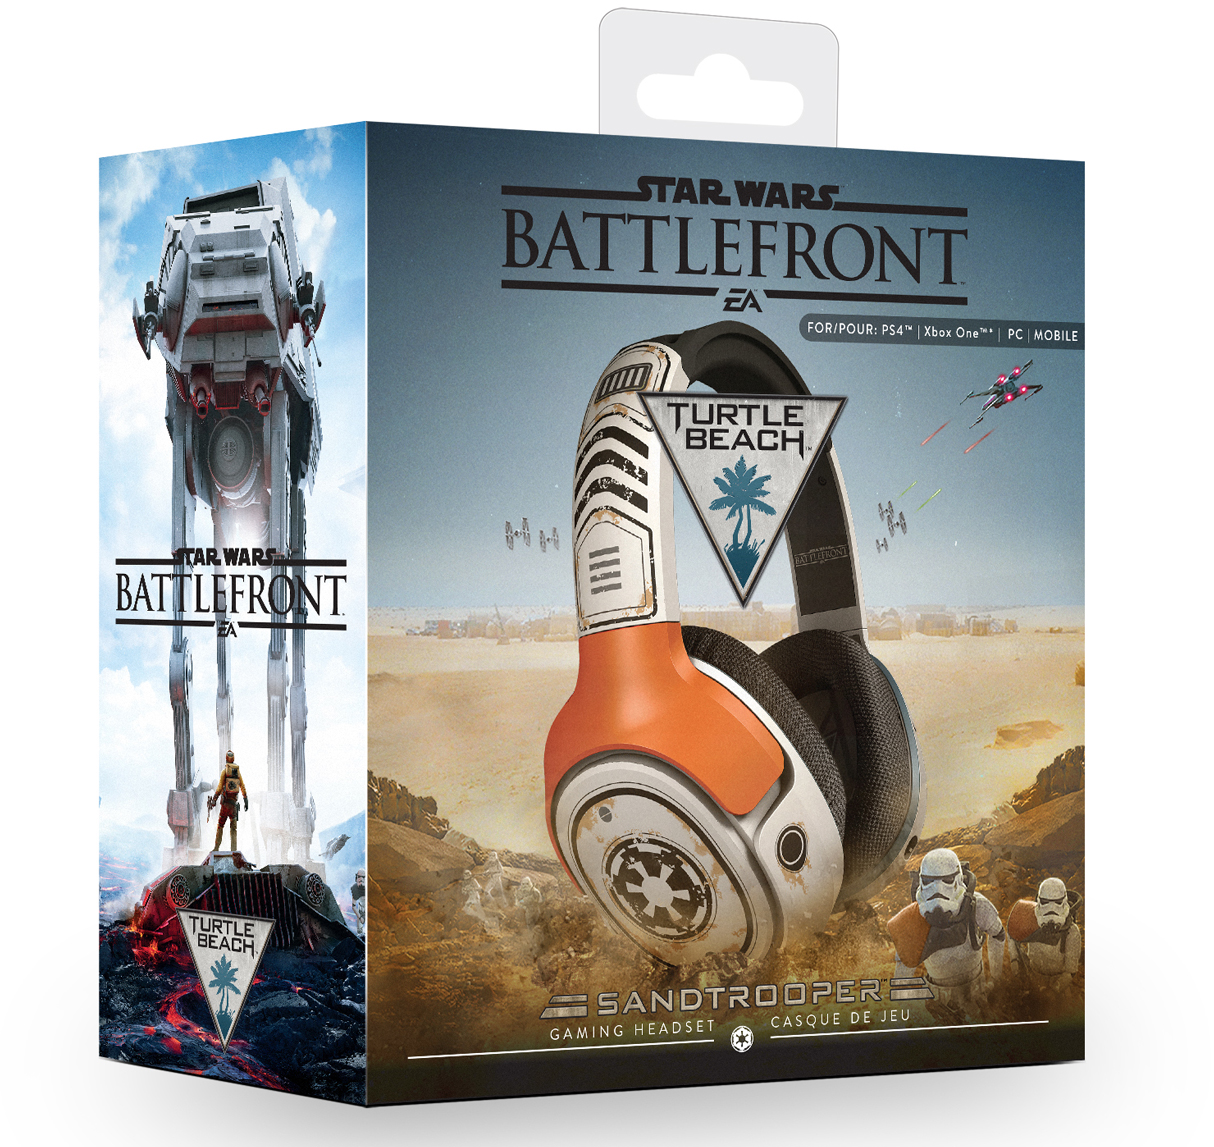 Turtle Beach Star Wars Battlefront Sandtrooper Gaming Headset box